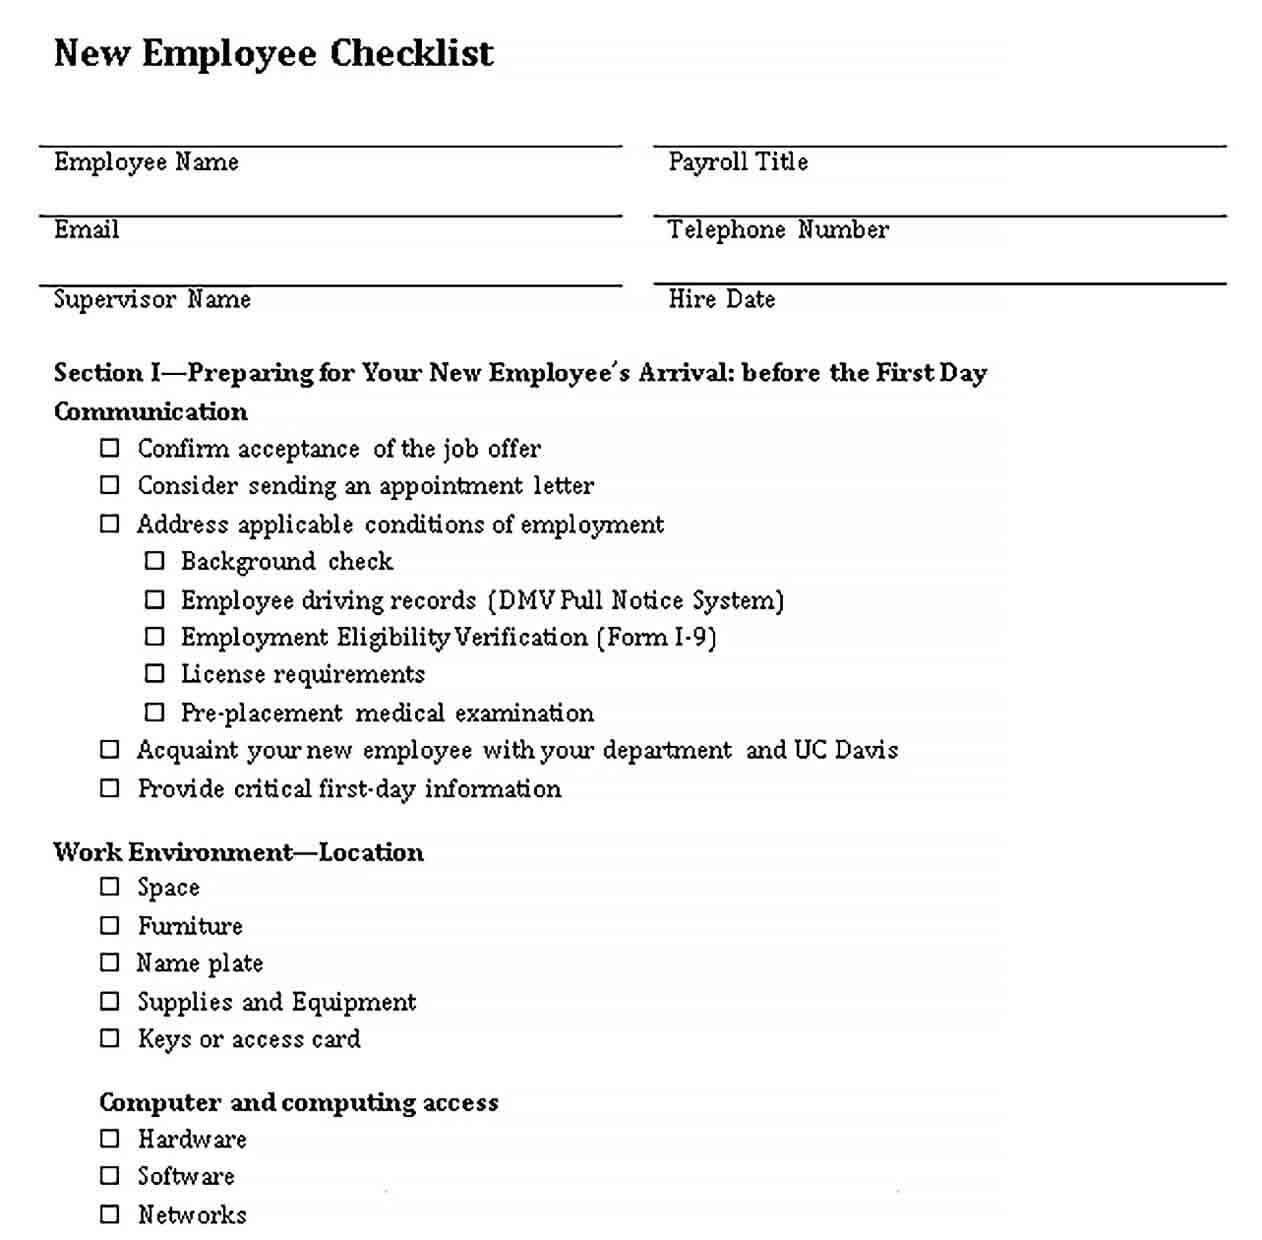 Sample New Employee Checklist